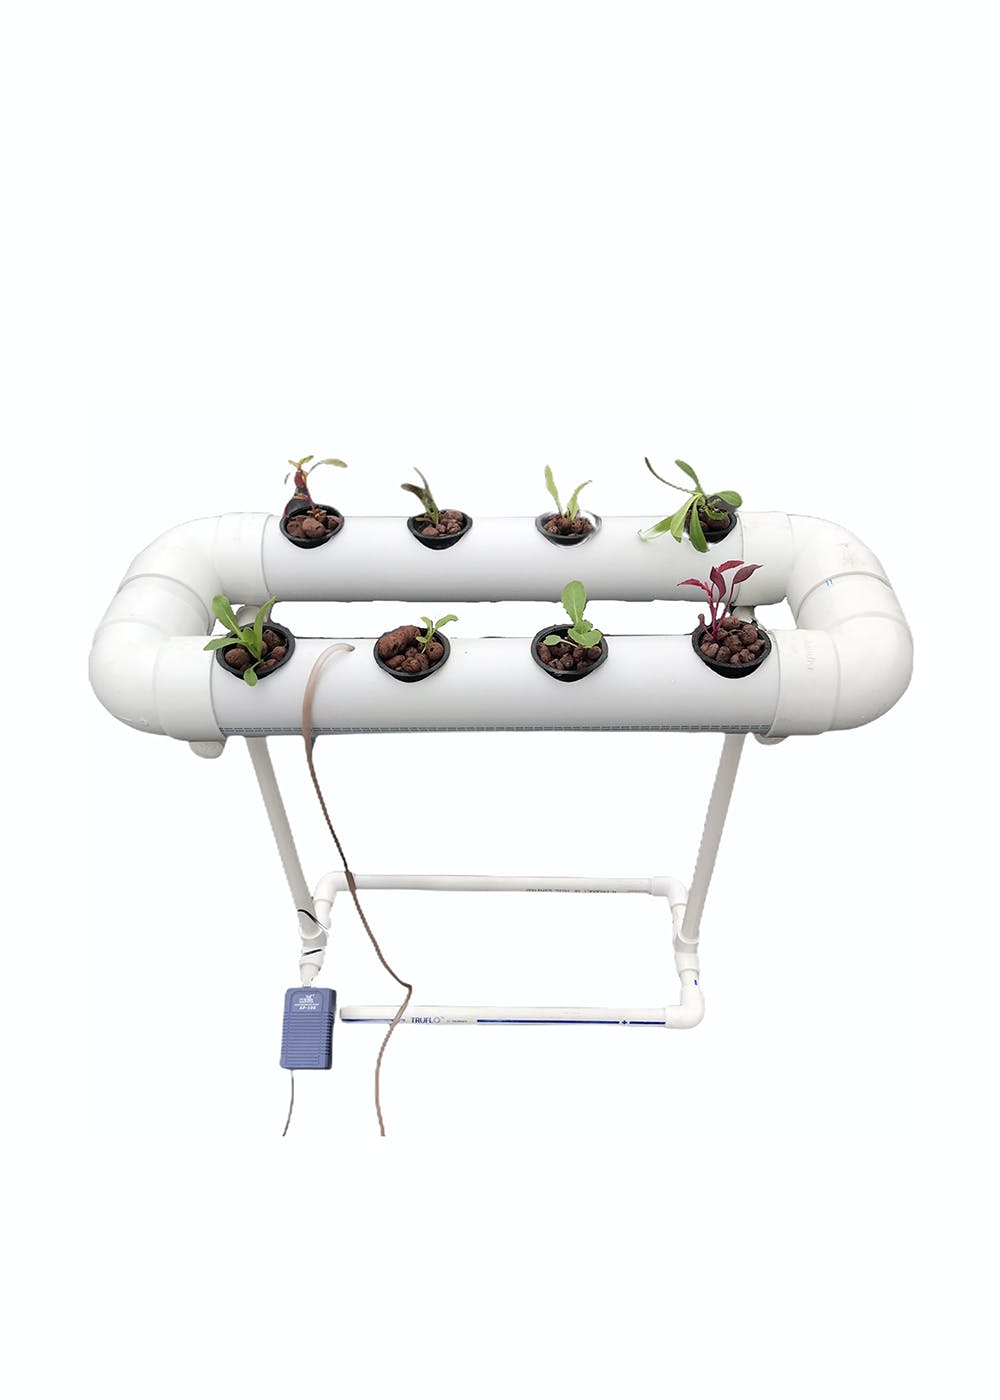 NutriTube 8 Planter - Hydroponic Home Grow Kit